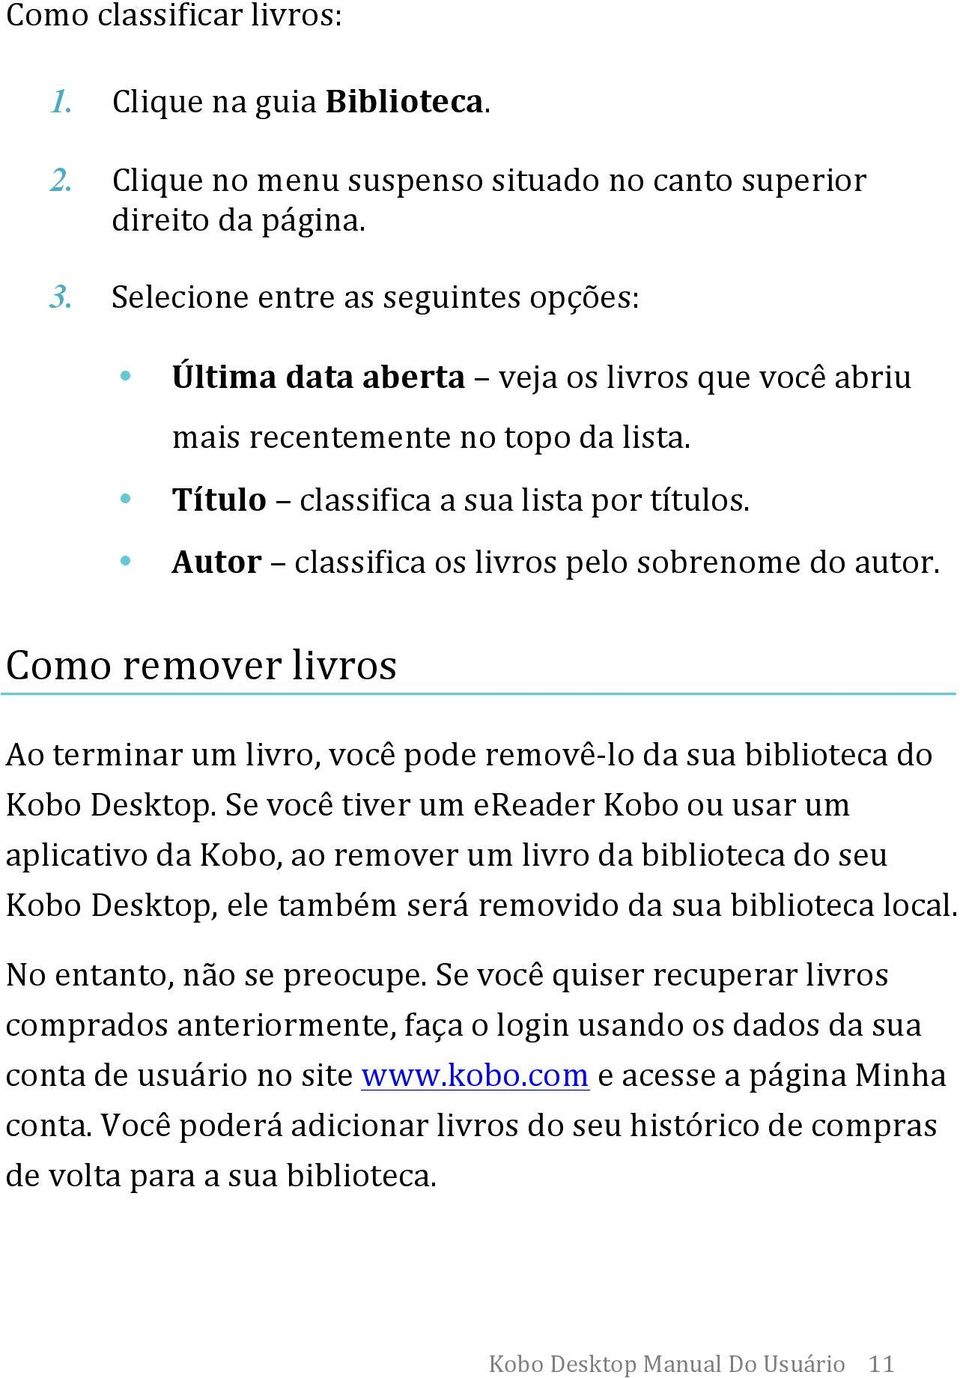 Kobo Software Mac 10.6